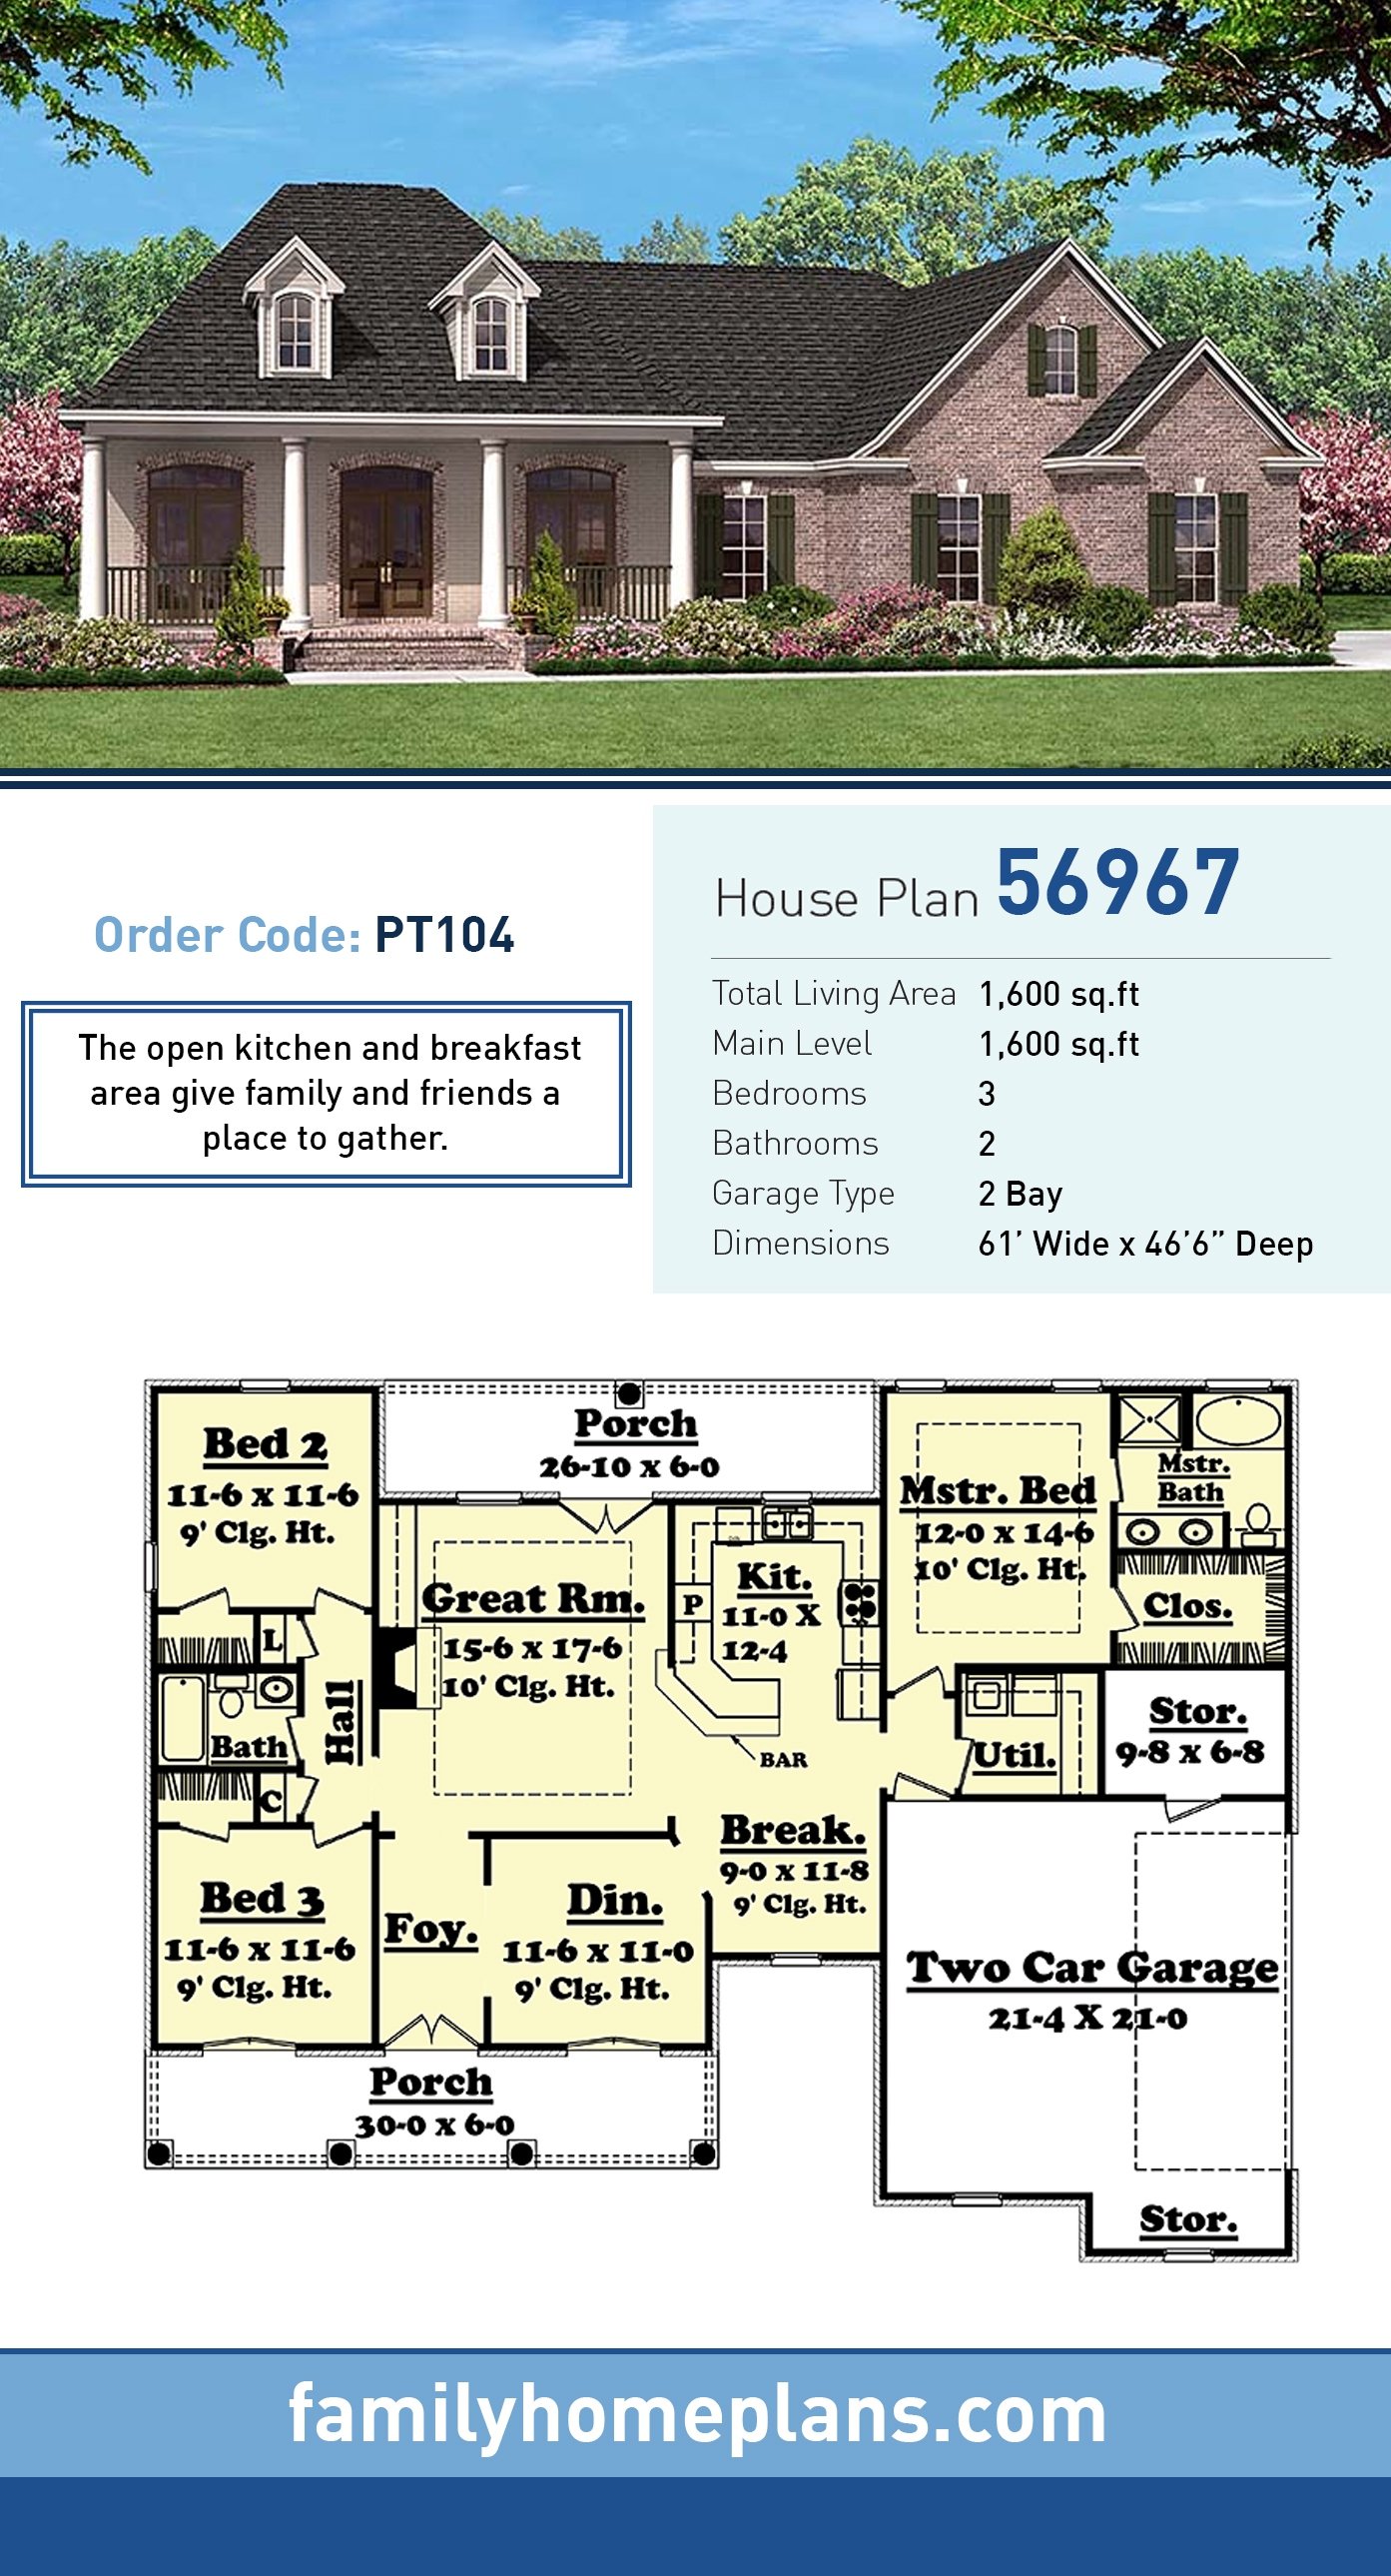 House Plan 56967